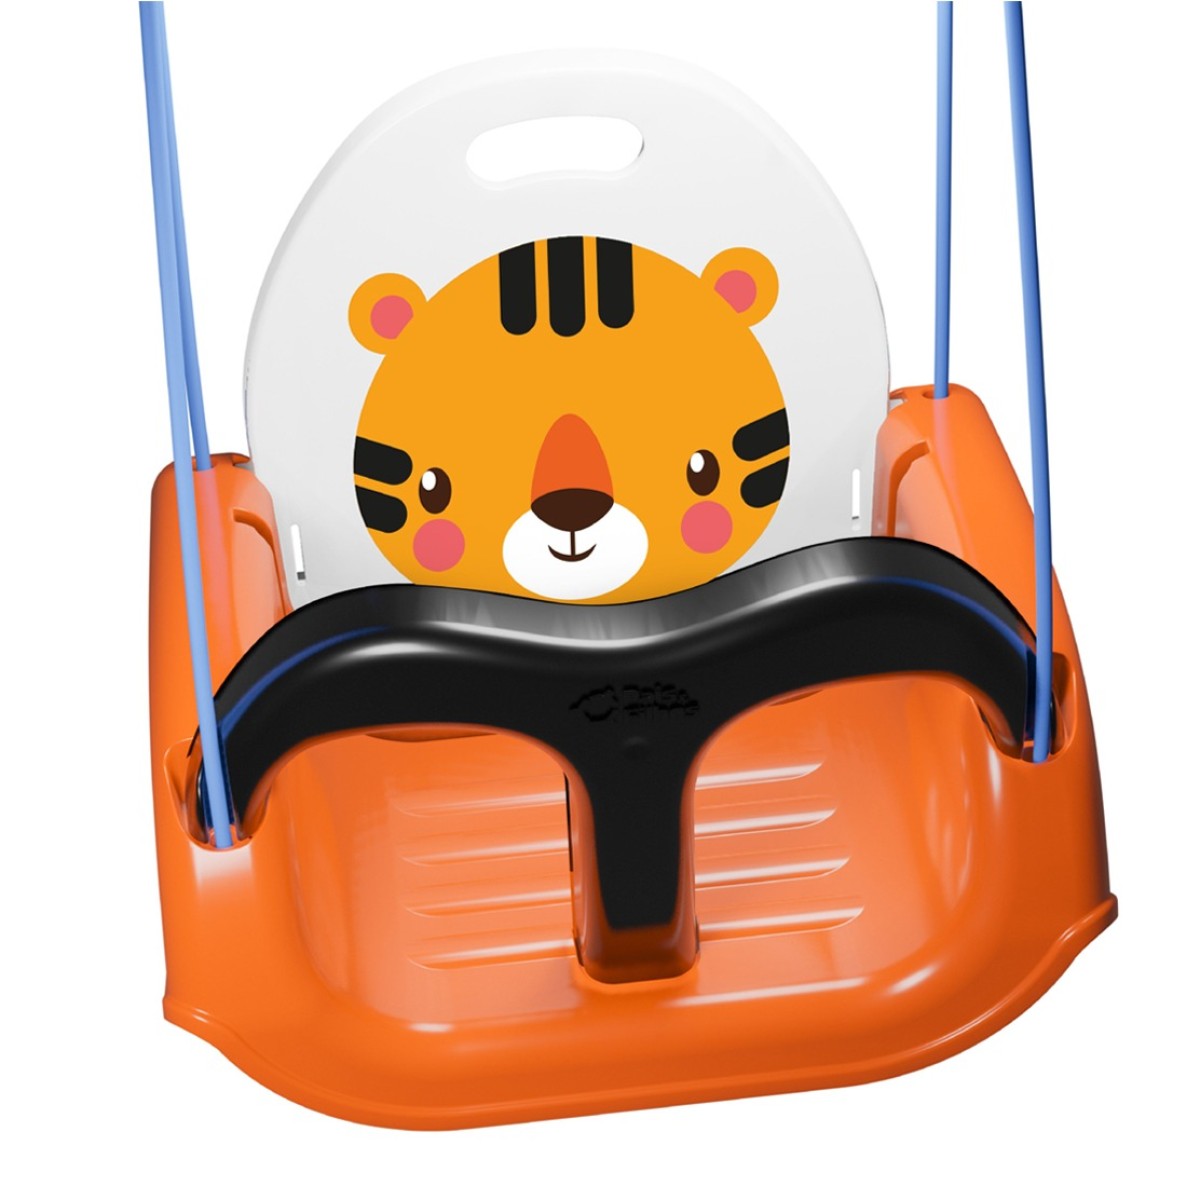 Balanço de plástico infantil de tigre-790356-57699